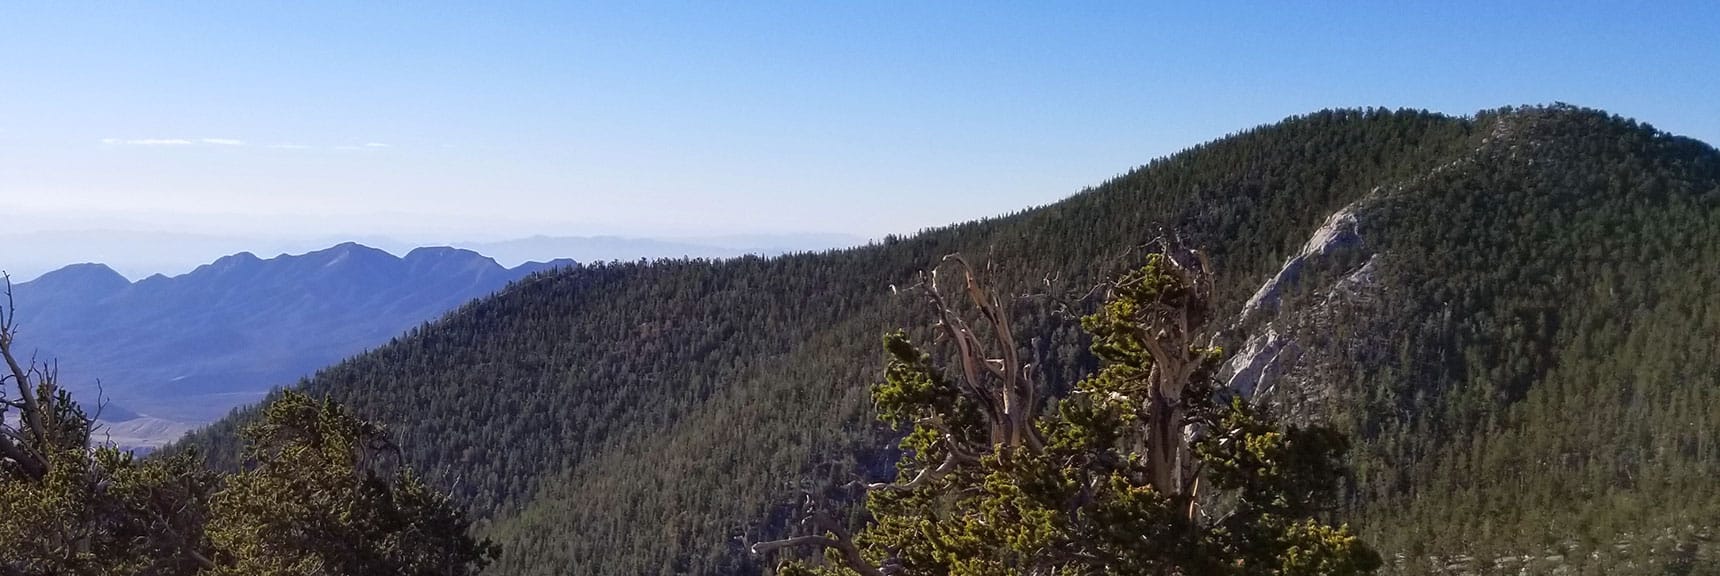 Fletcher Peak from Ridge Over North Loop Trail, La Madre Mt. in Background